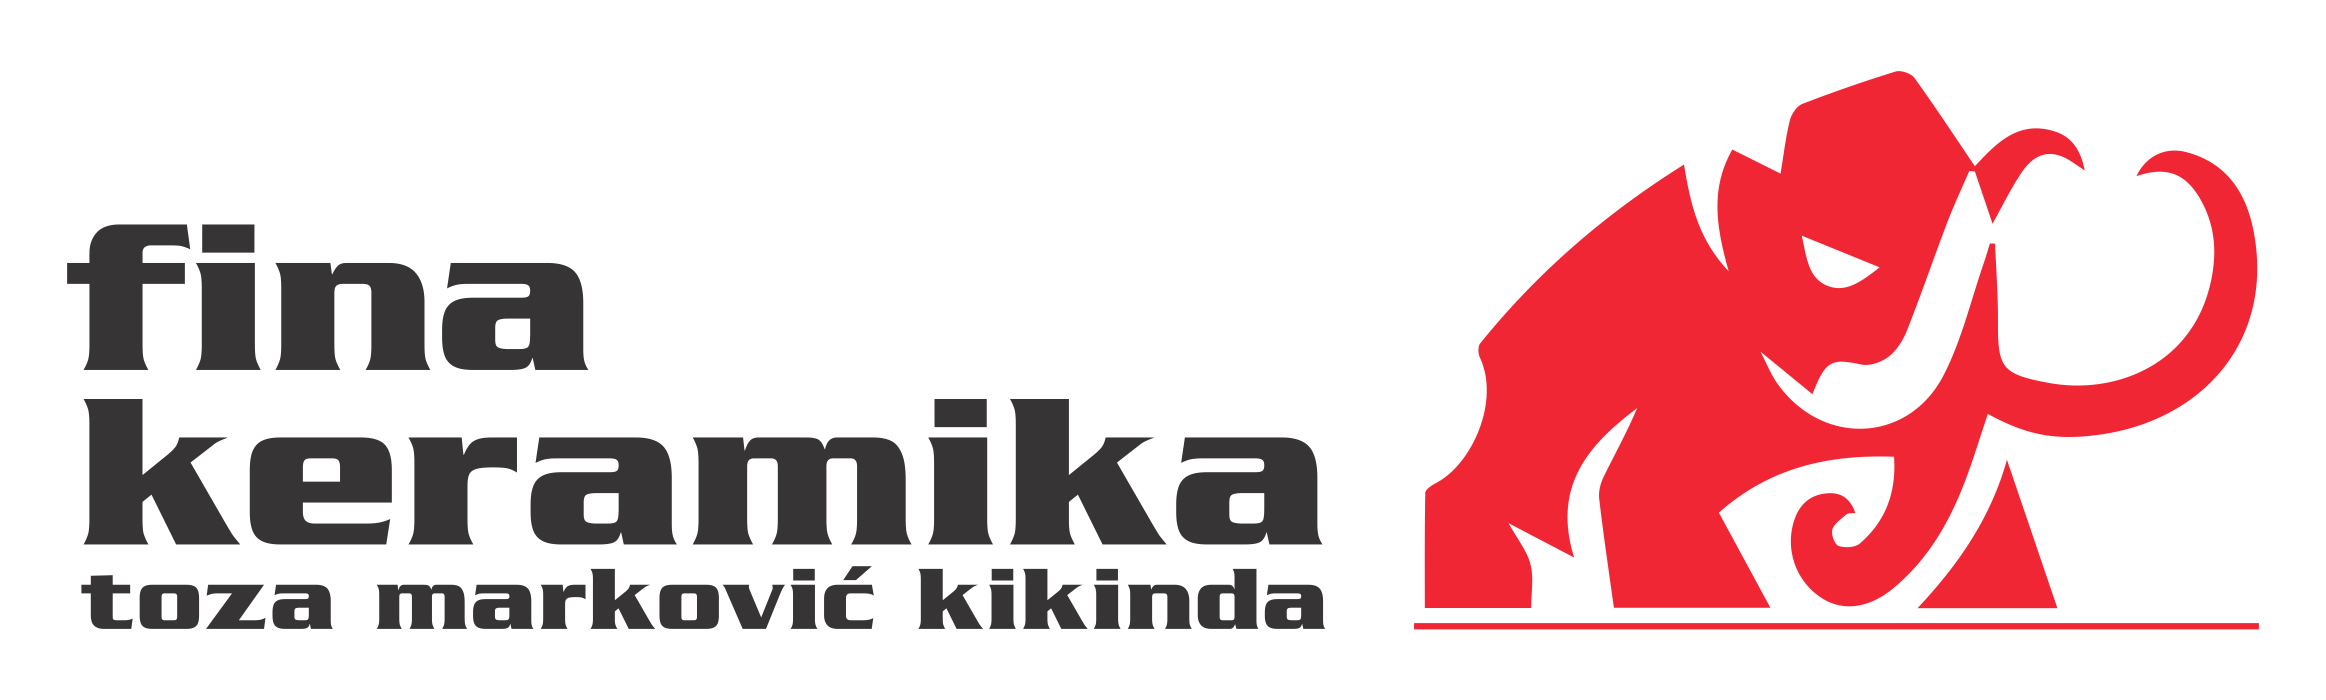 Fina keramika_Logo u bloku